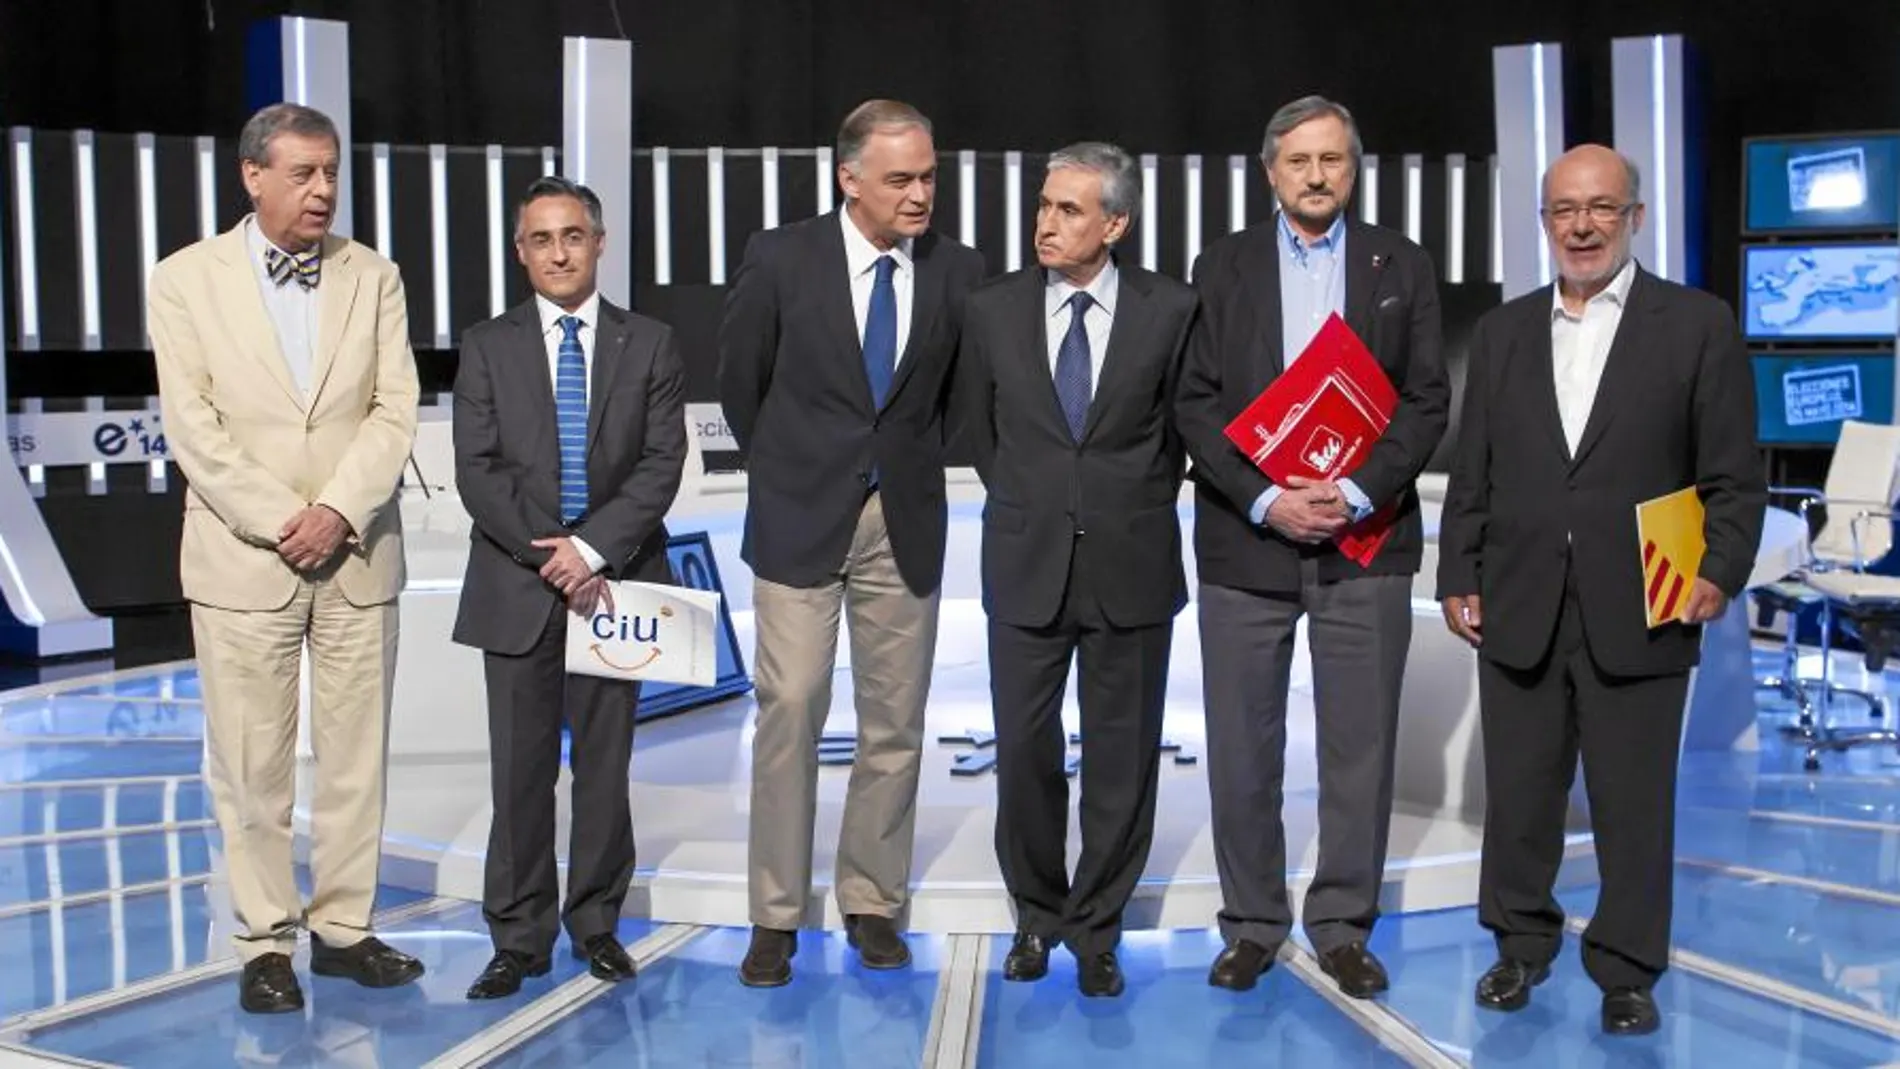 De izquierda a derecha, Sosa Wagner (UPyD), Ramón Tremosa (CEU), González Pons (PP), Jáuregui (PSOE), Willy Meyer (IU) y Terricabras (ERC)